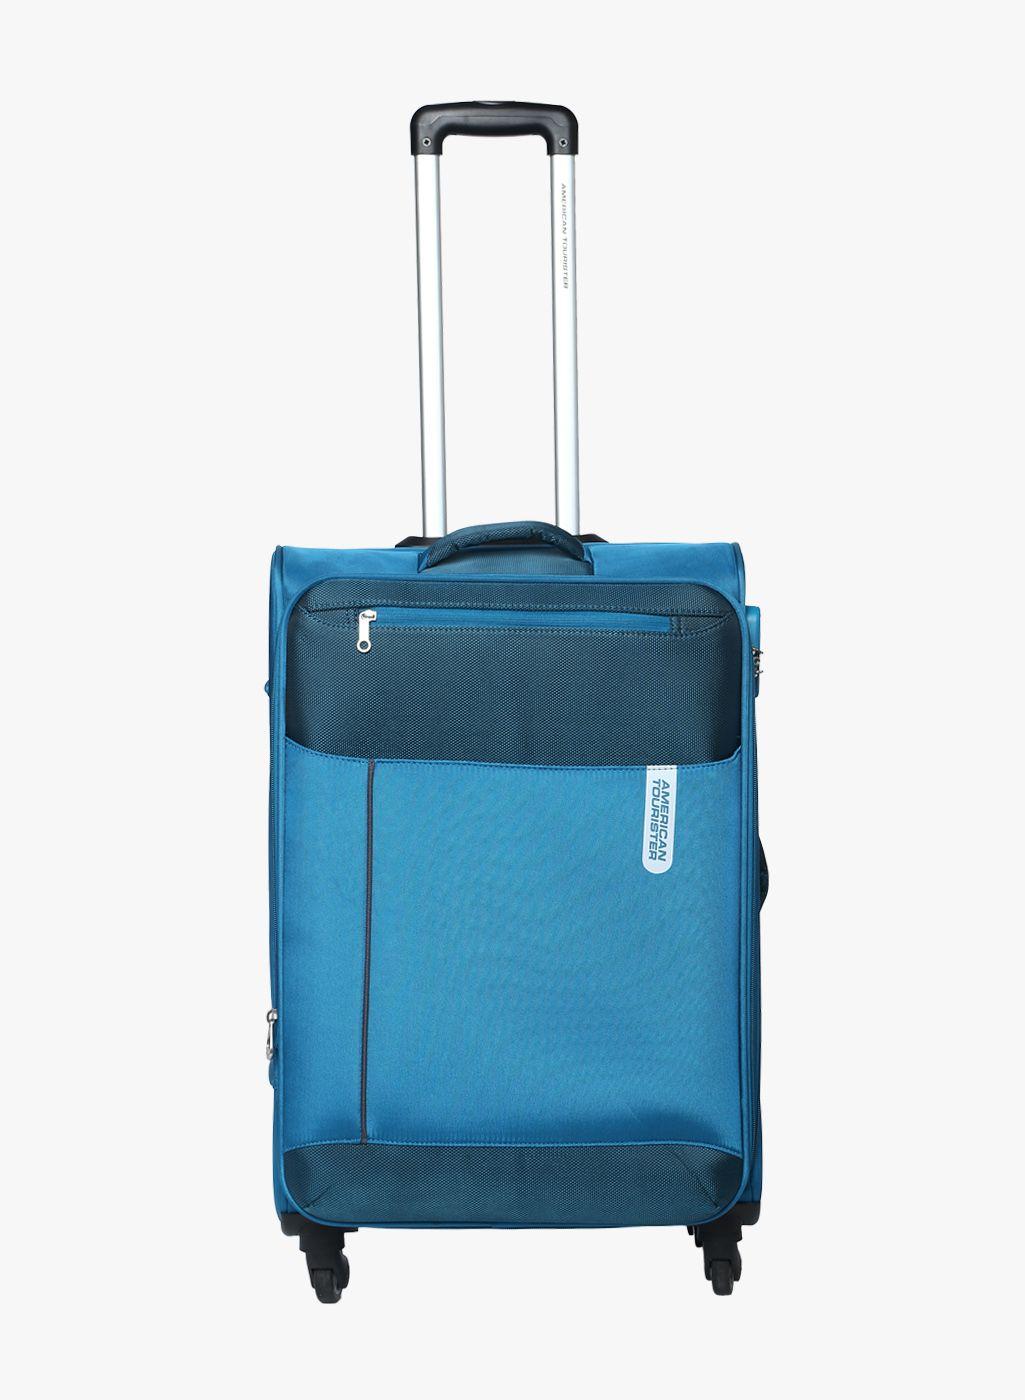 american tourister unisex turquoise blue fa7 (0) 11 002 medium trolley bag